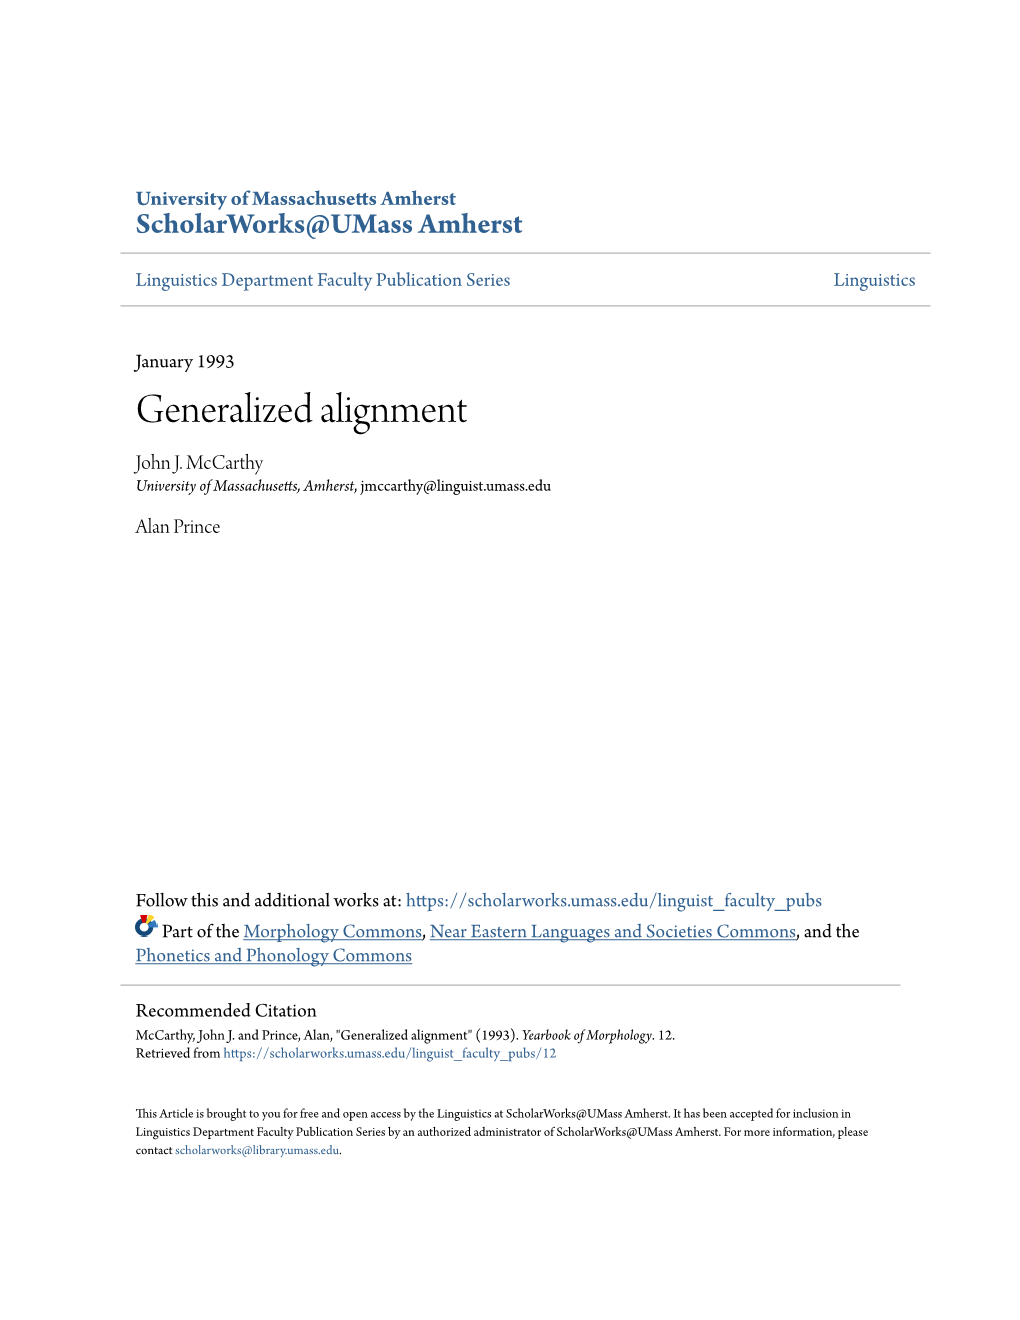 Generalized Alignment John J